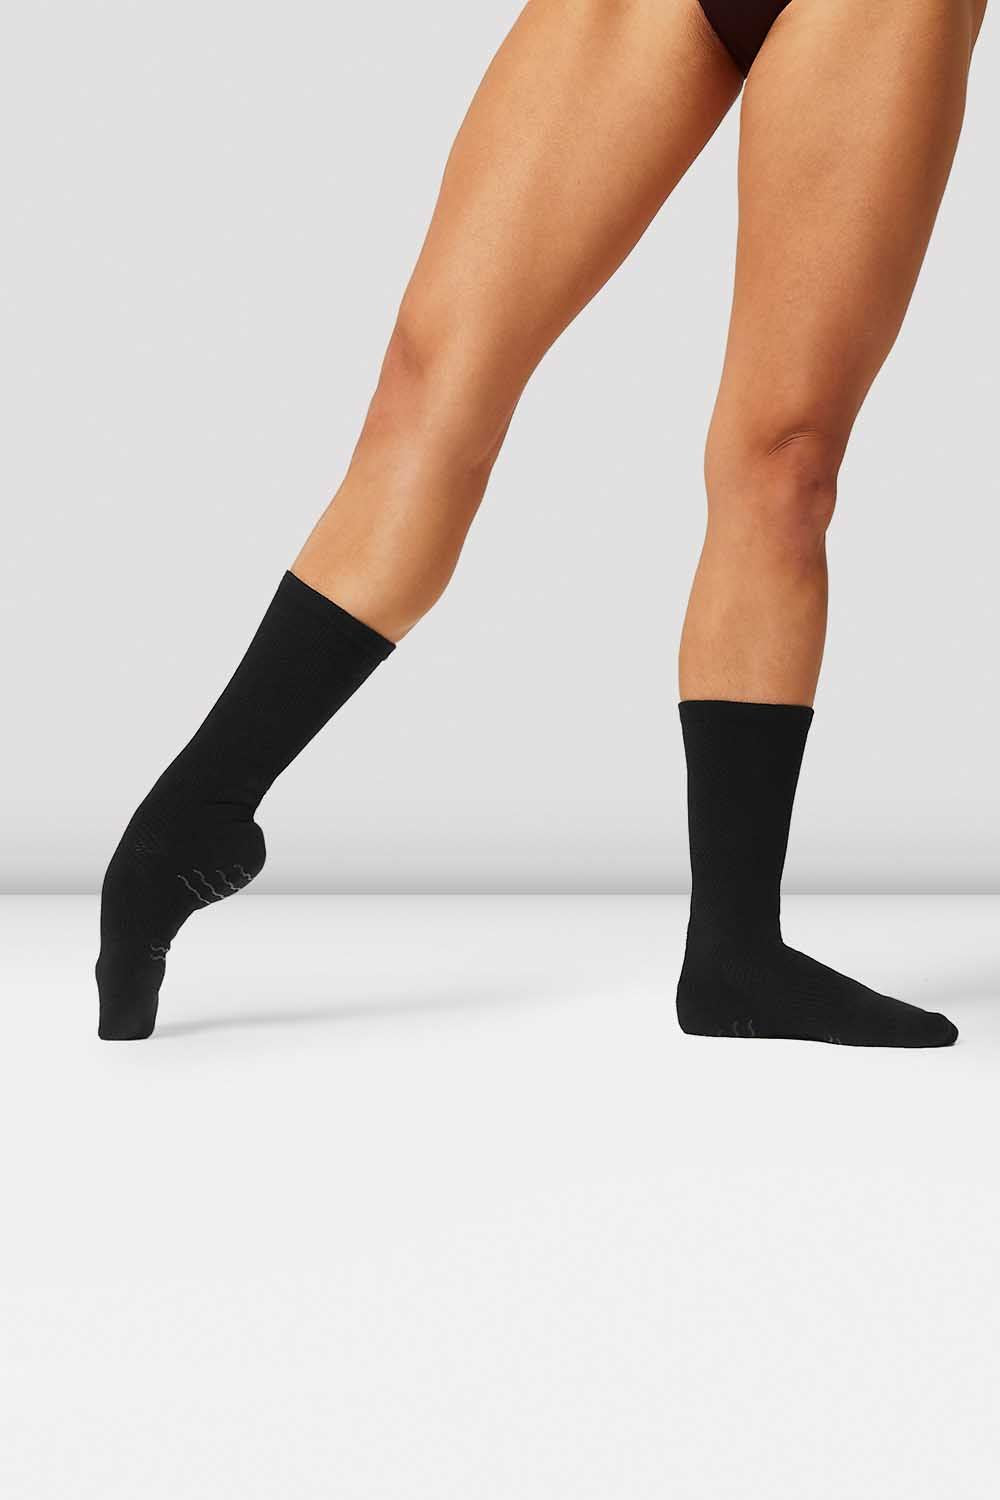 Blochsox™ Socks For Contemporary Dance